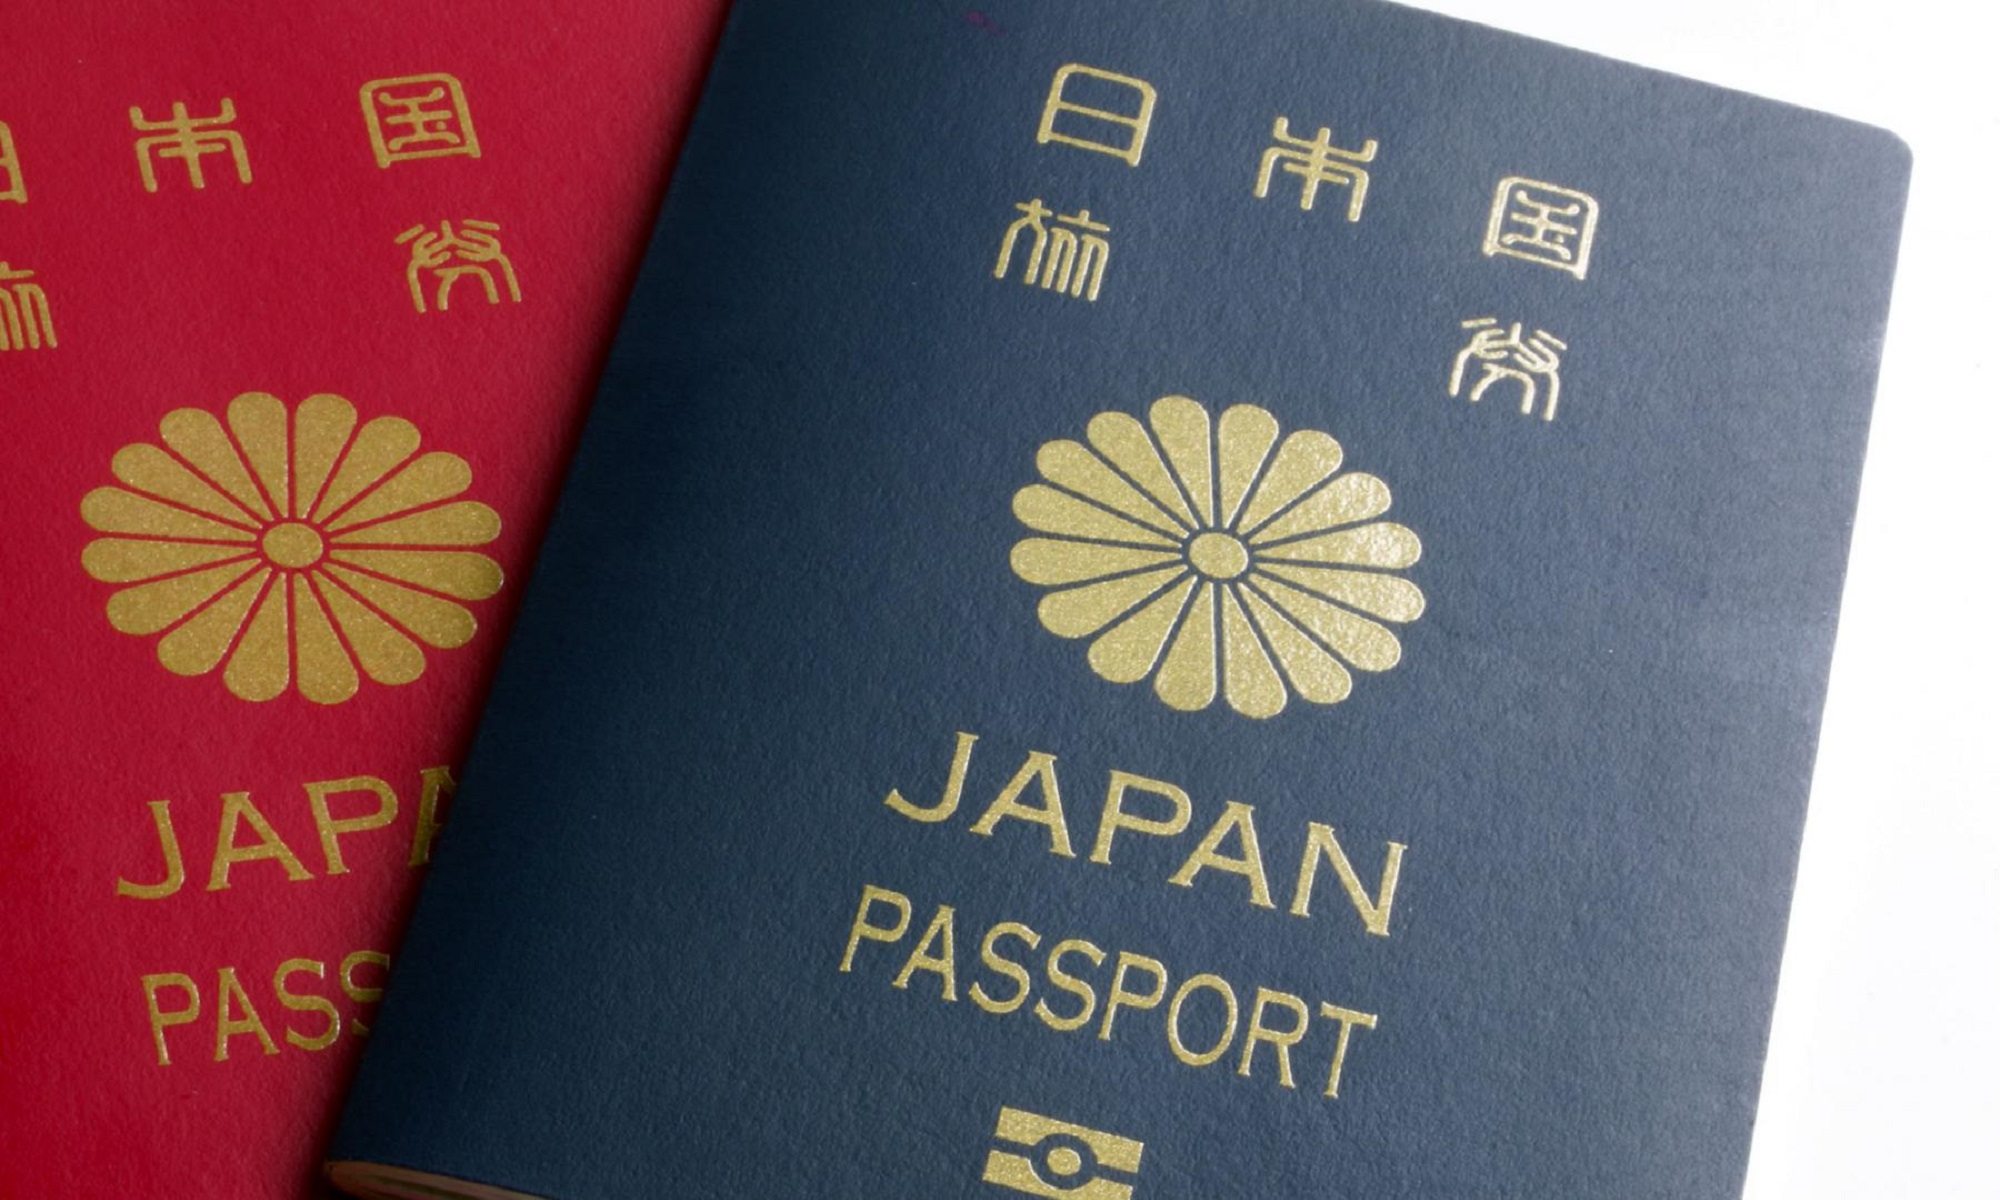 Passport of Japan